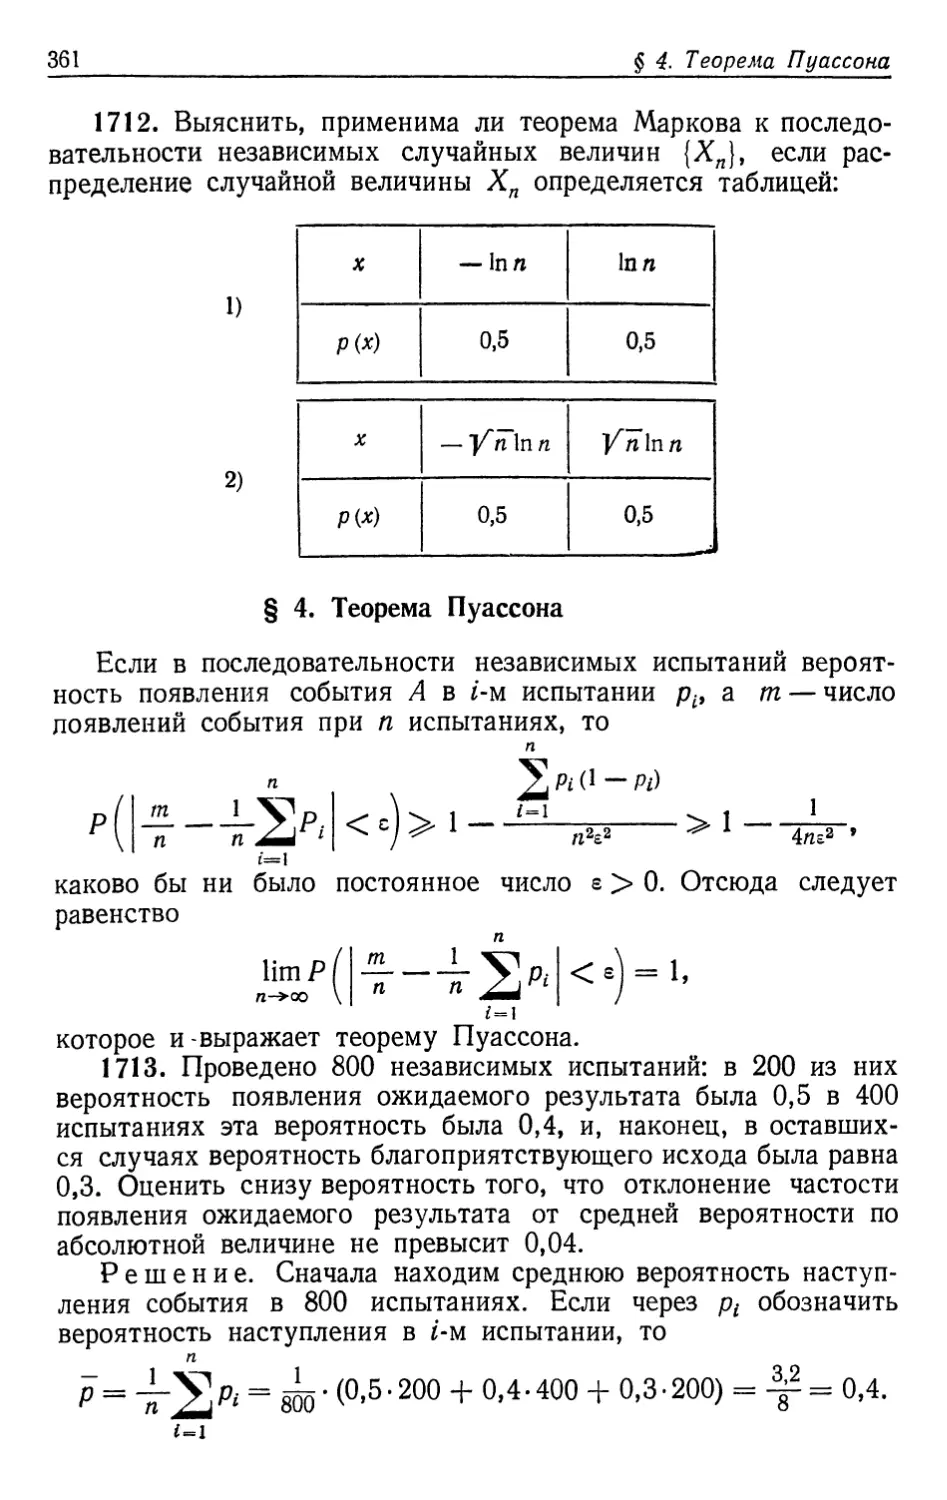 § 4. Теорема Пуассона